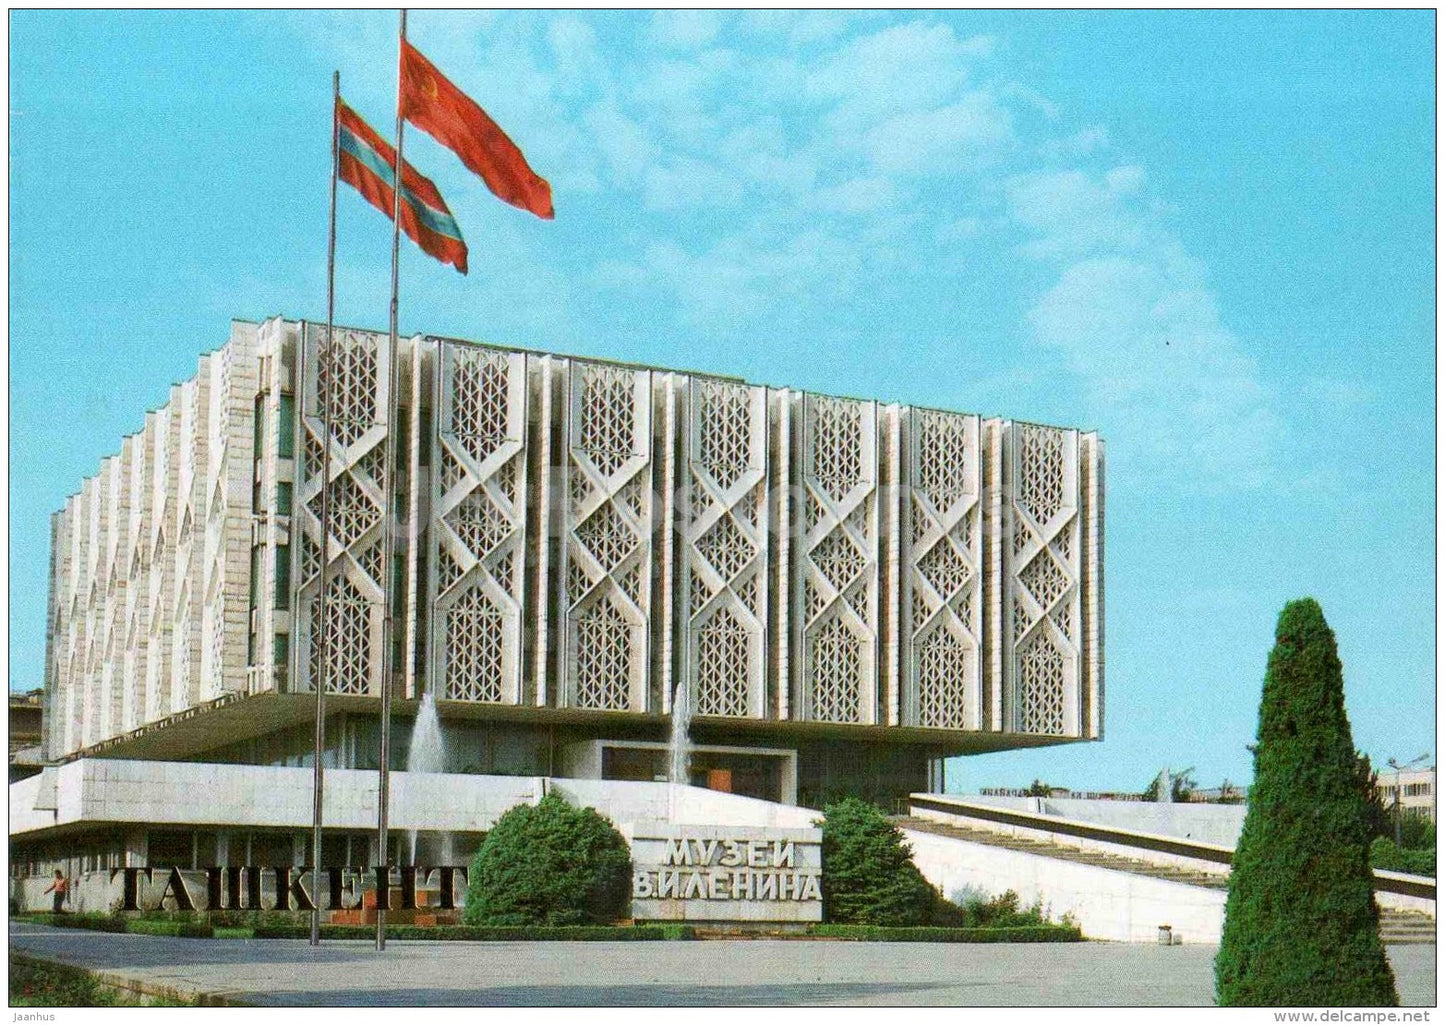 Branch of the Central Lenin Museum - Tashkent - 1986 - Uzbekistan USSR - unused - JH Postcards